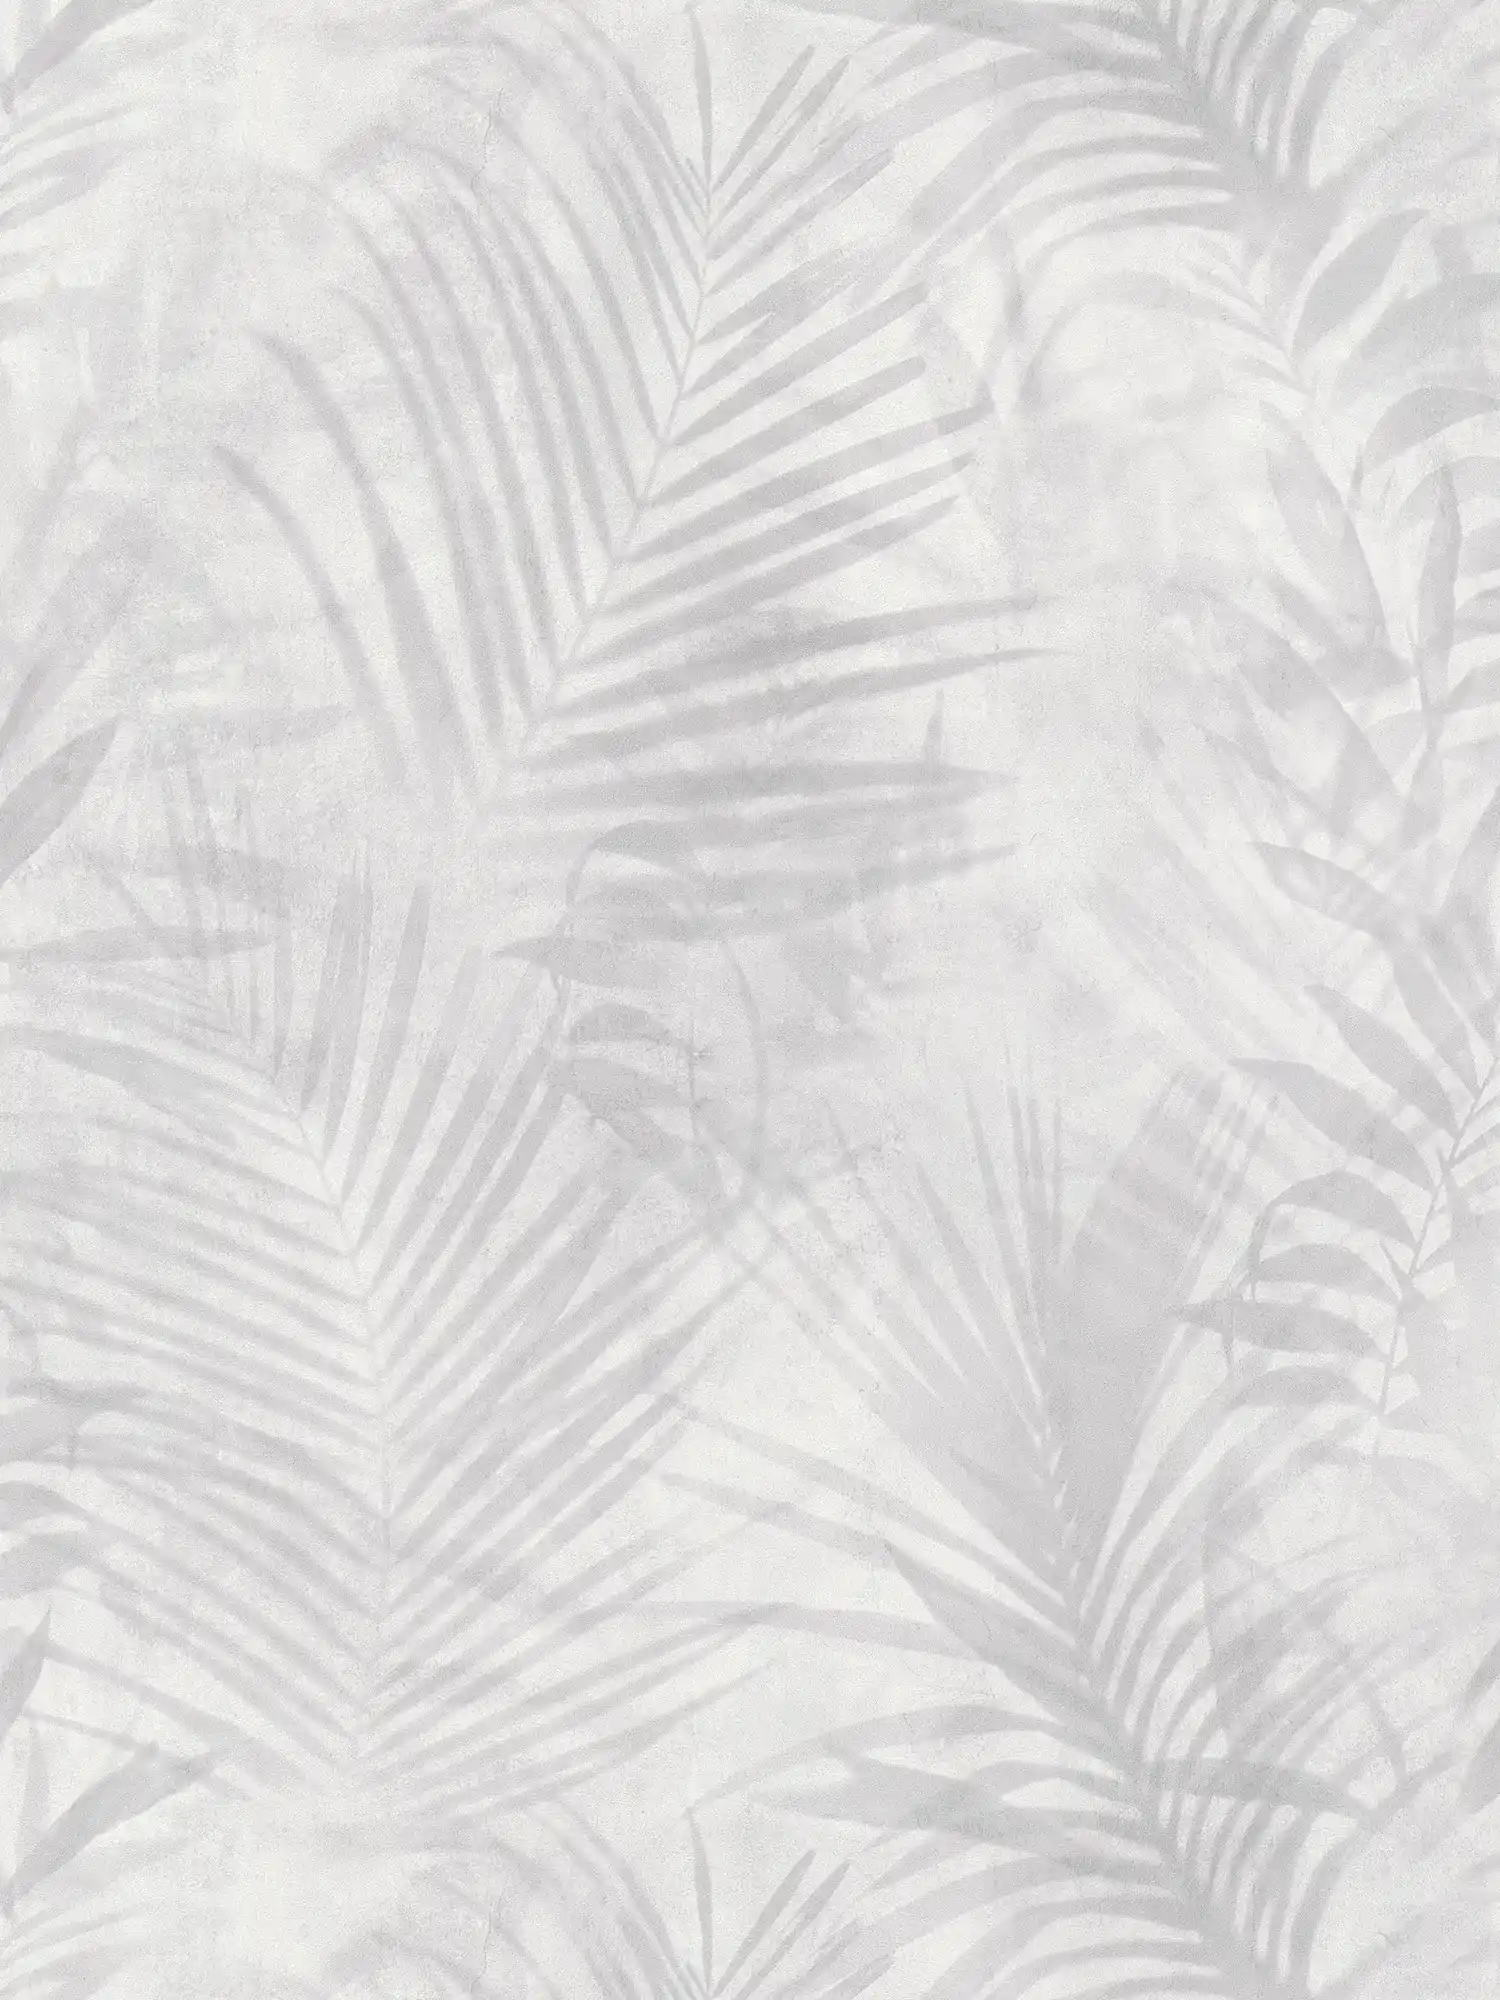 wallpaper palm tree pattern in linen look - grey, white, cream
